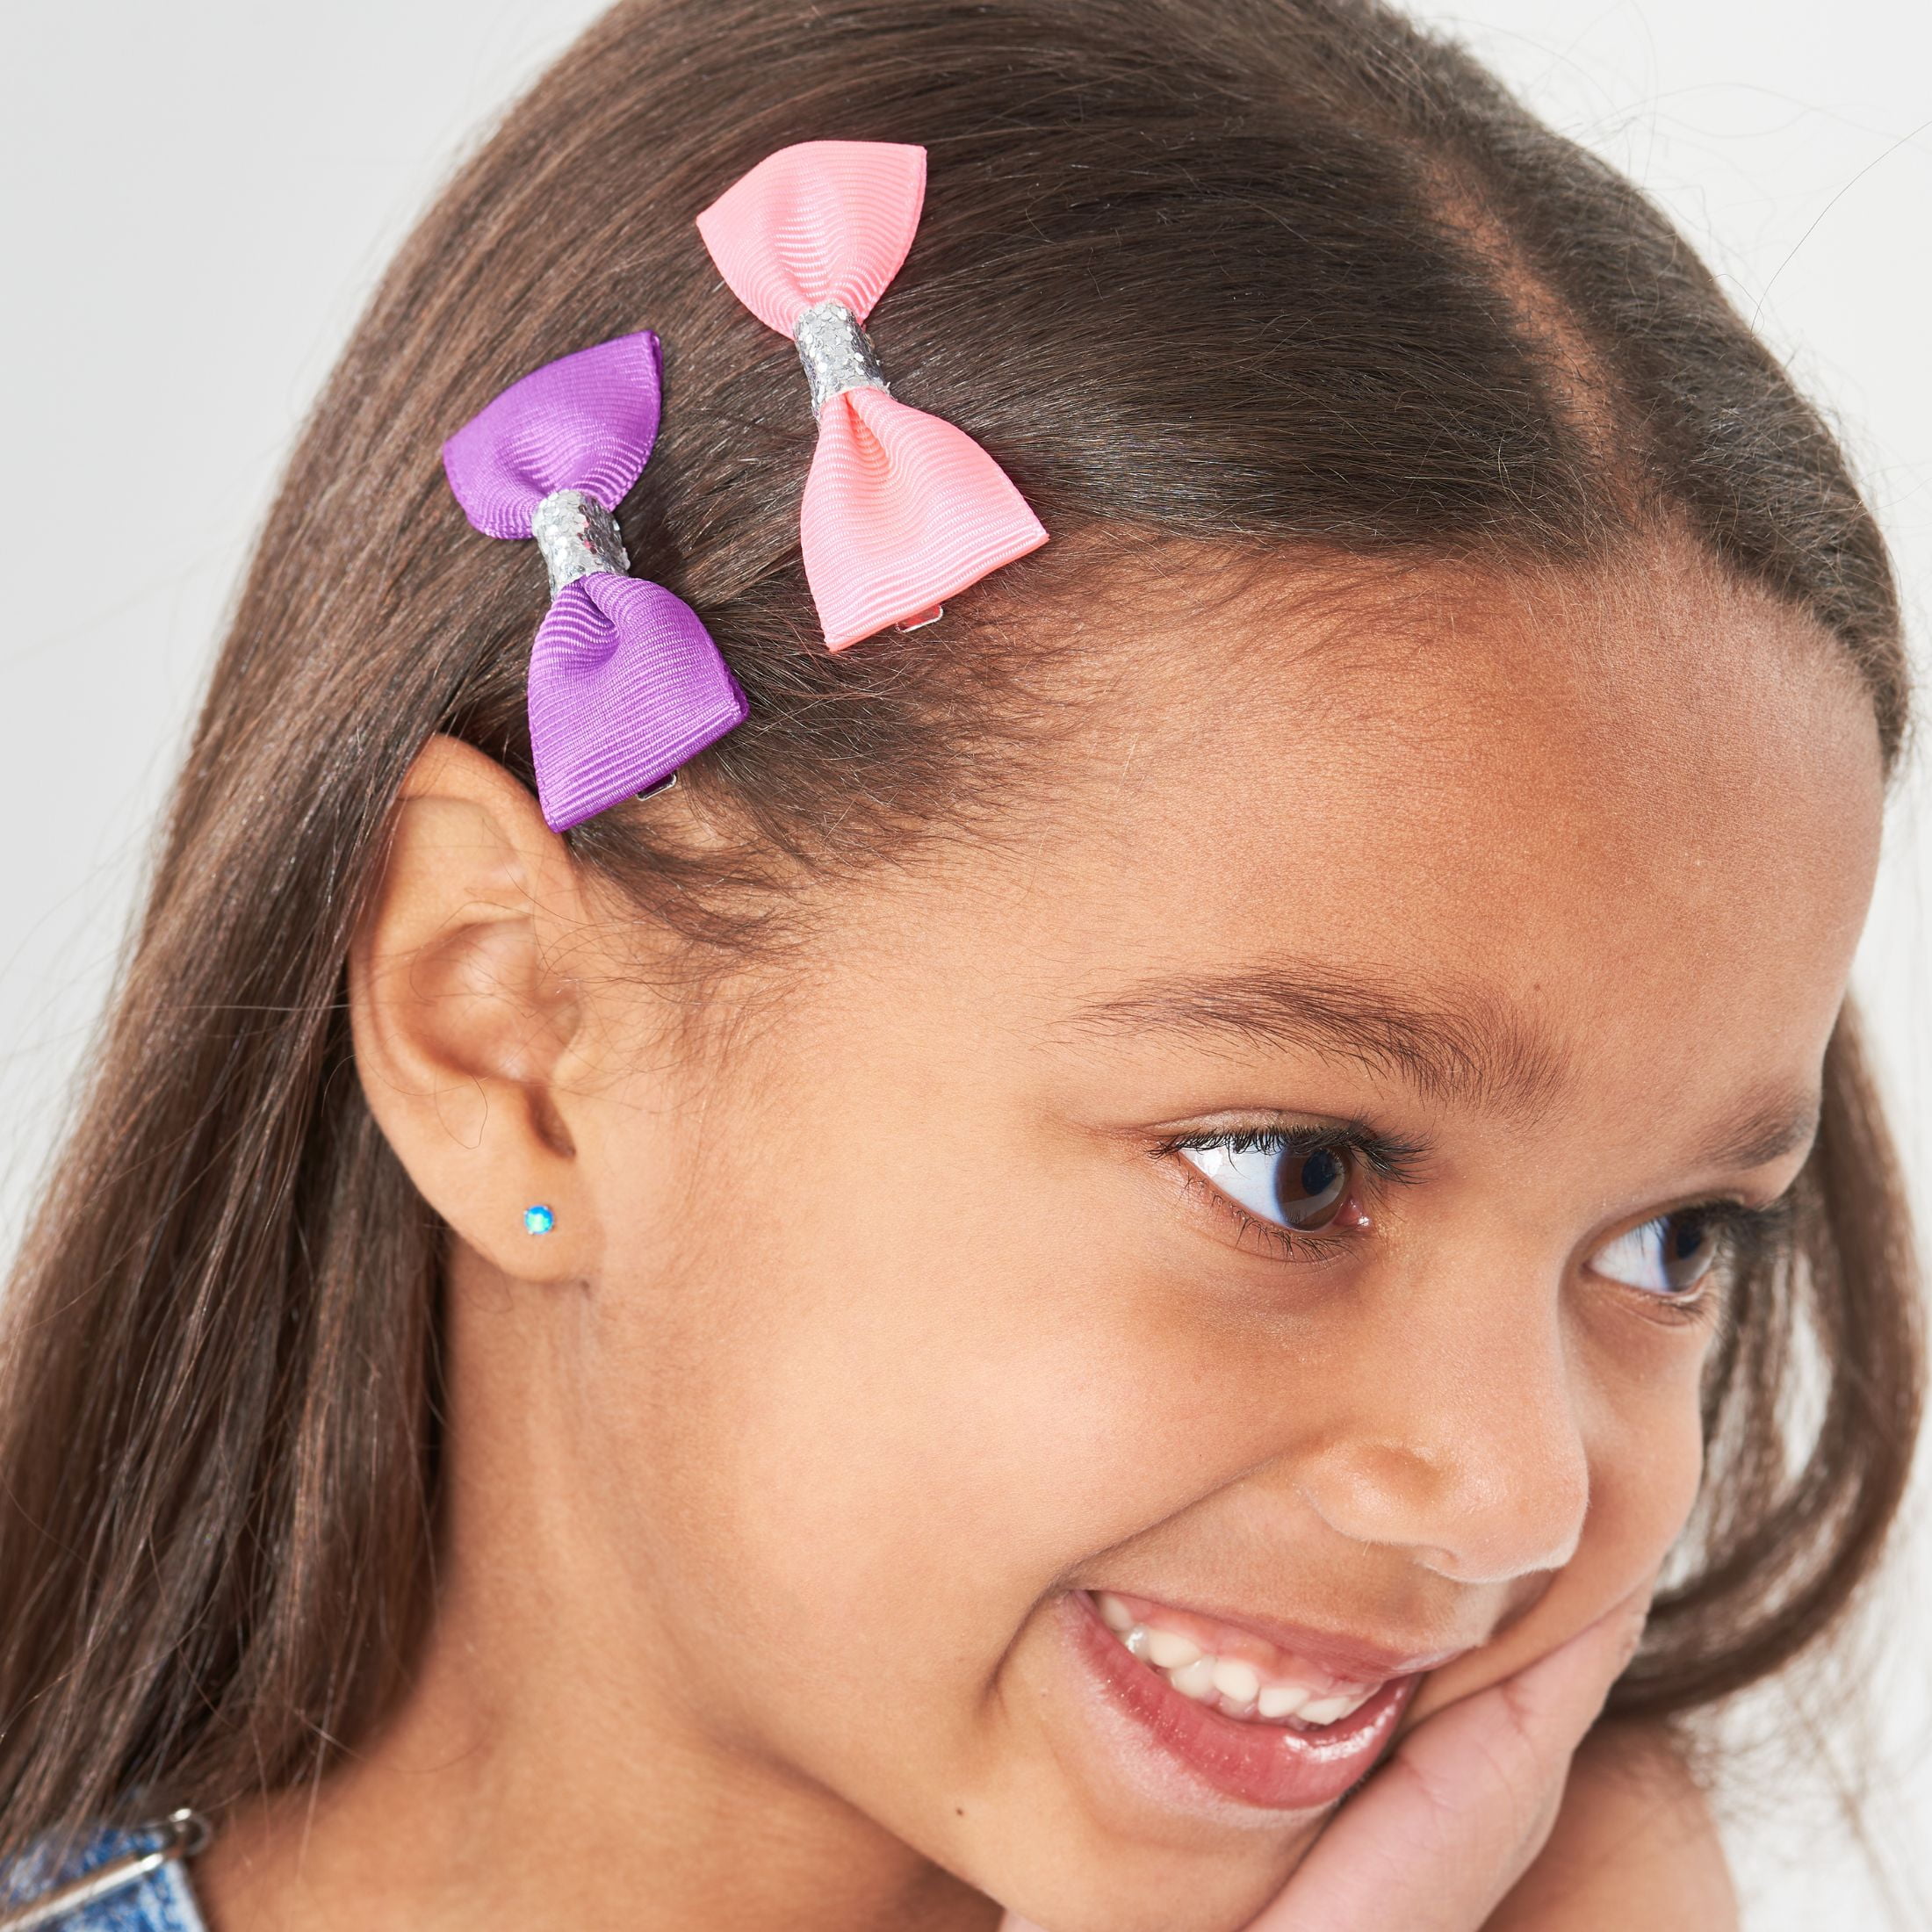 DIY Hair Clips / Hair Tie Ideas For Baby Girl - Easy Step by Step By Elysia  Handmade #12 - YouTube